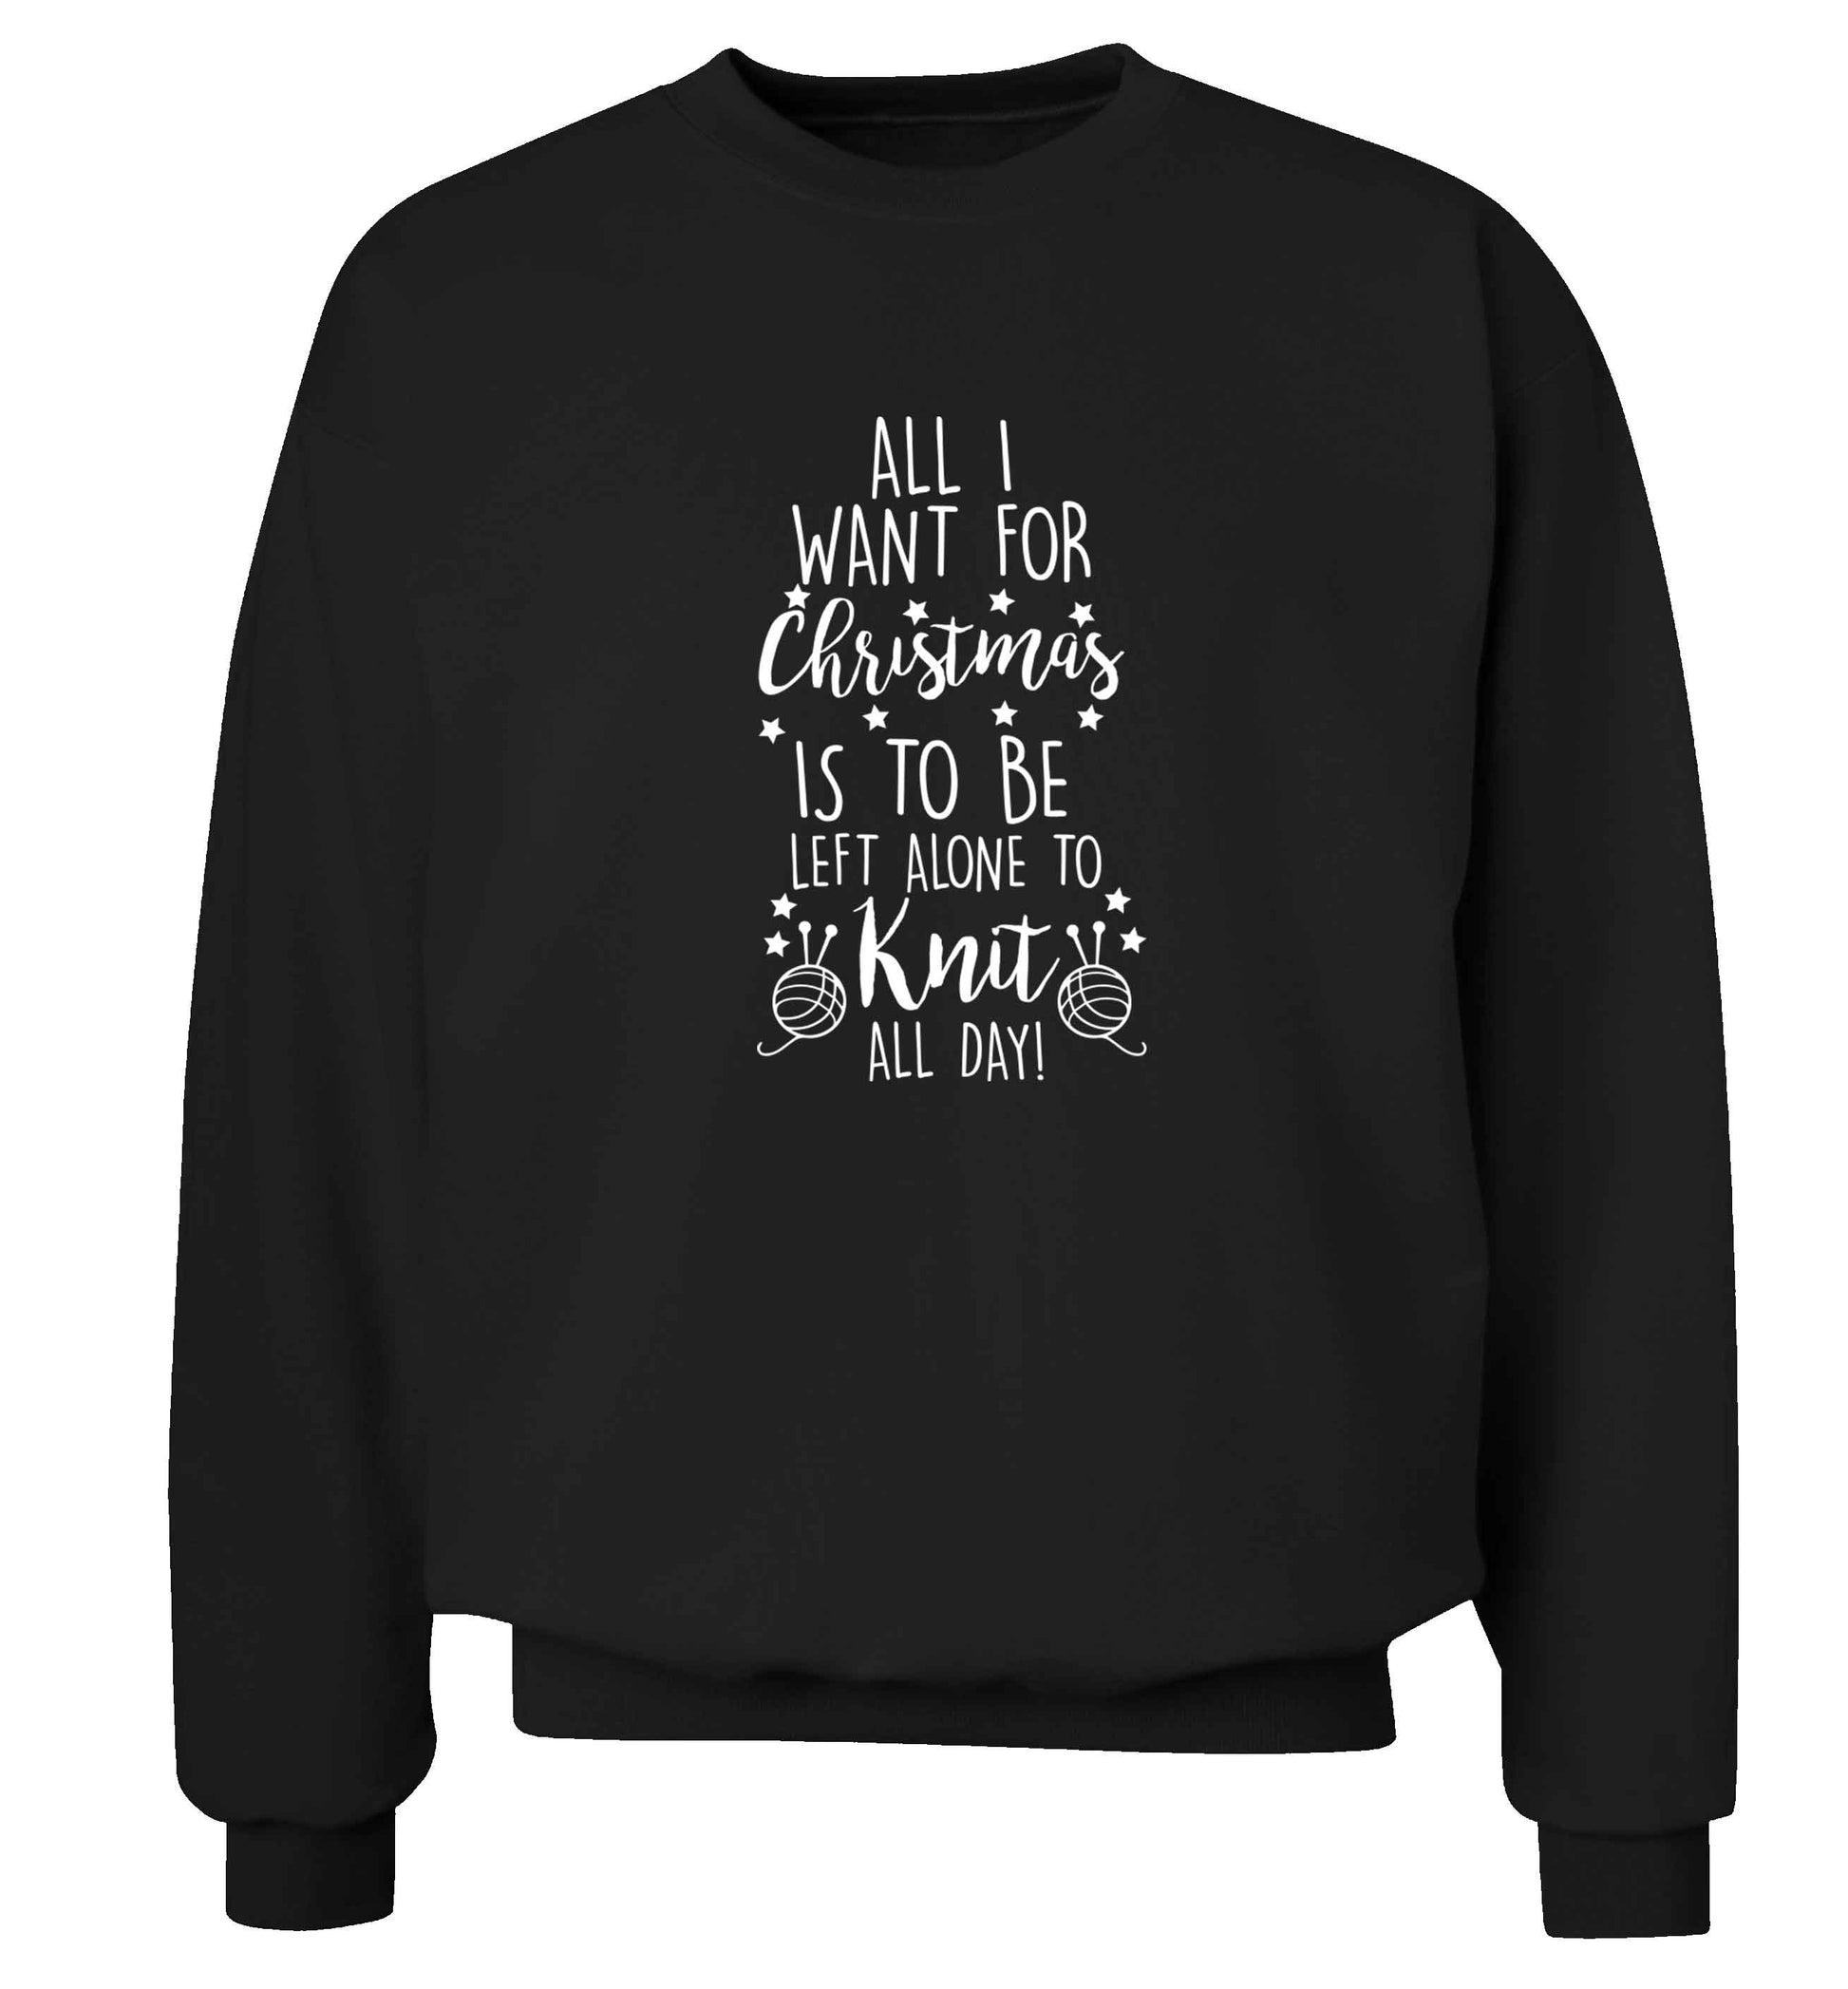 Merry Christmas adult's unisex black sweater 2XL